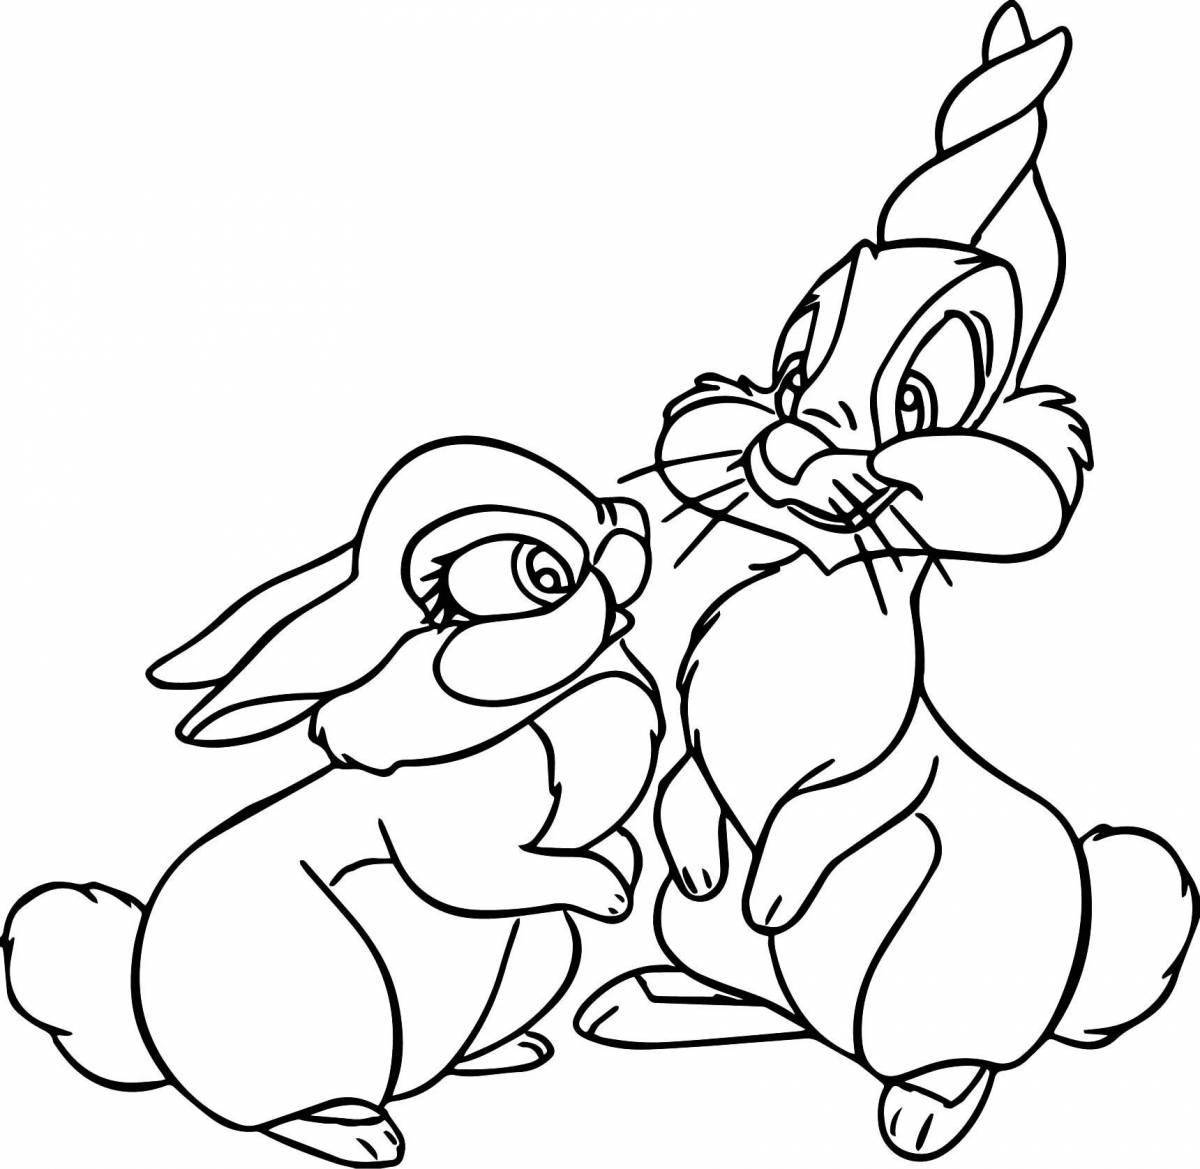 Cute cartoon hare coloring book